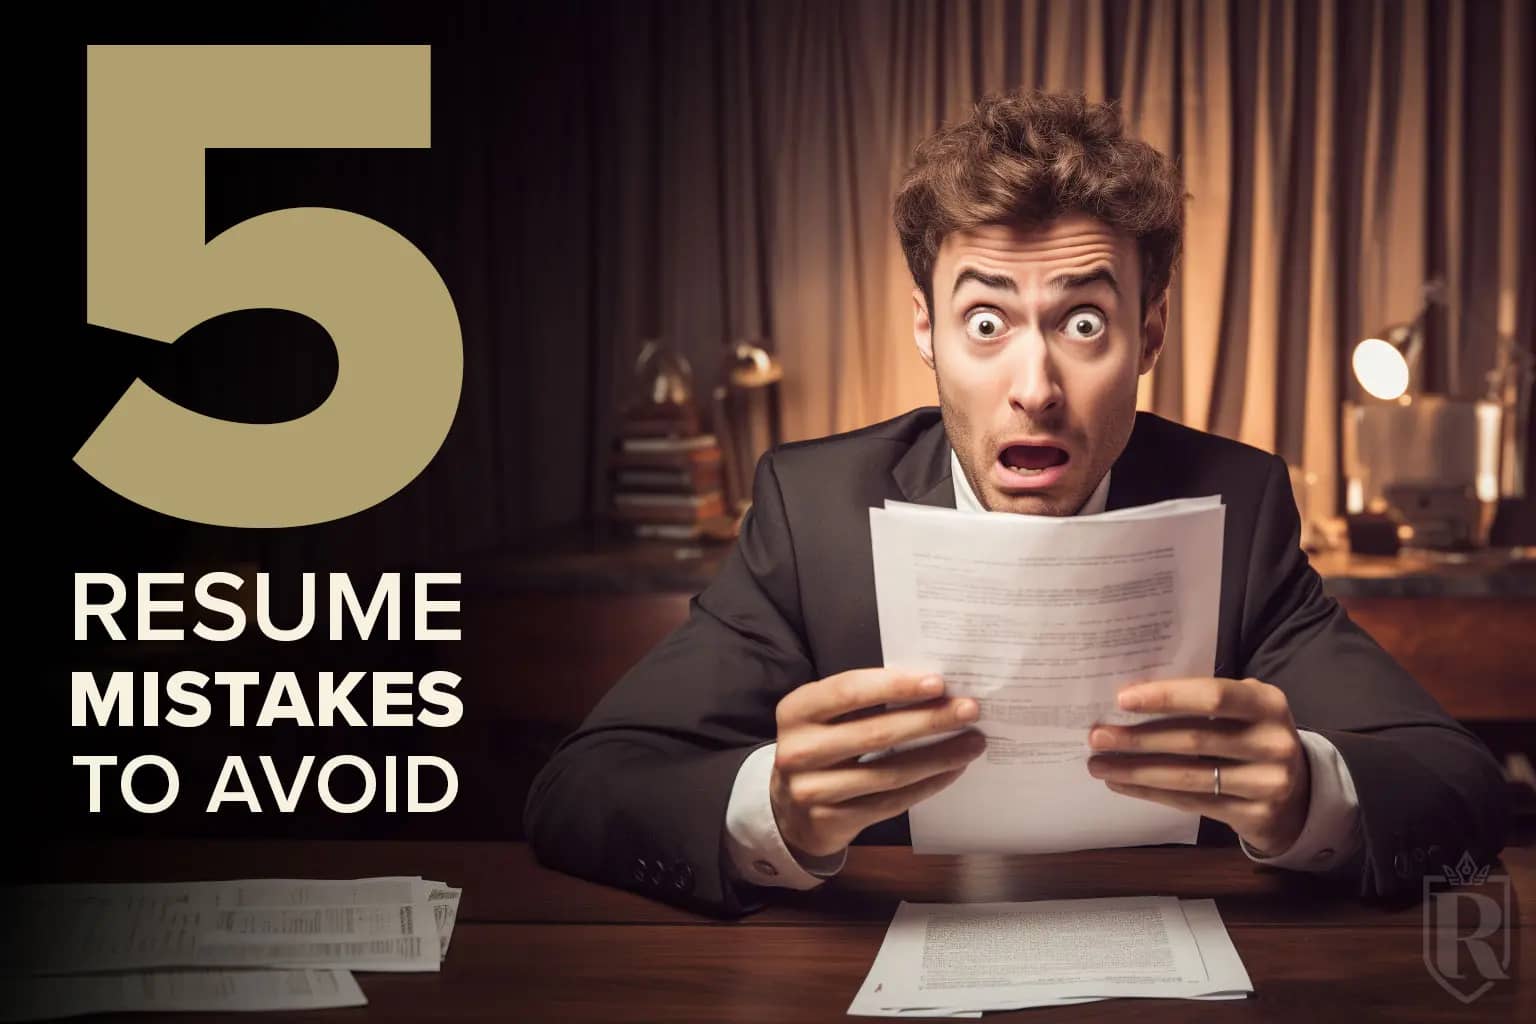 5 Resume Mistakes to Avoid